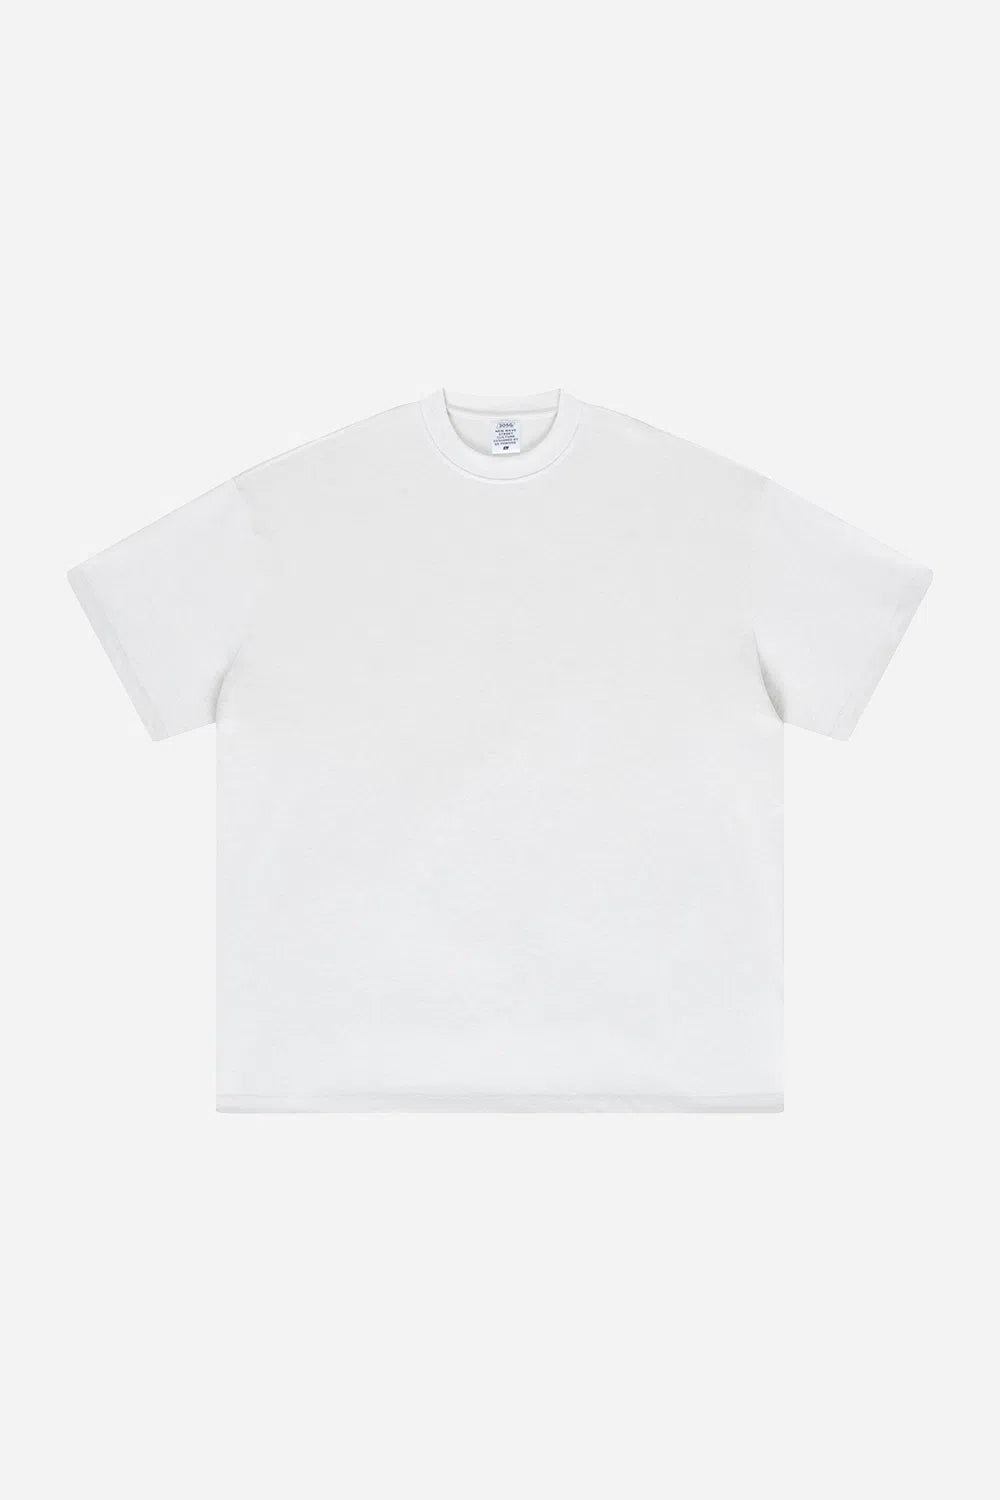 T-Shirt Blank Heavy 100% Cotton - WHITE-LOTABY